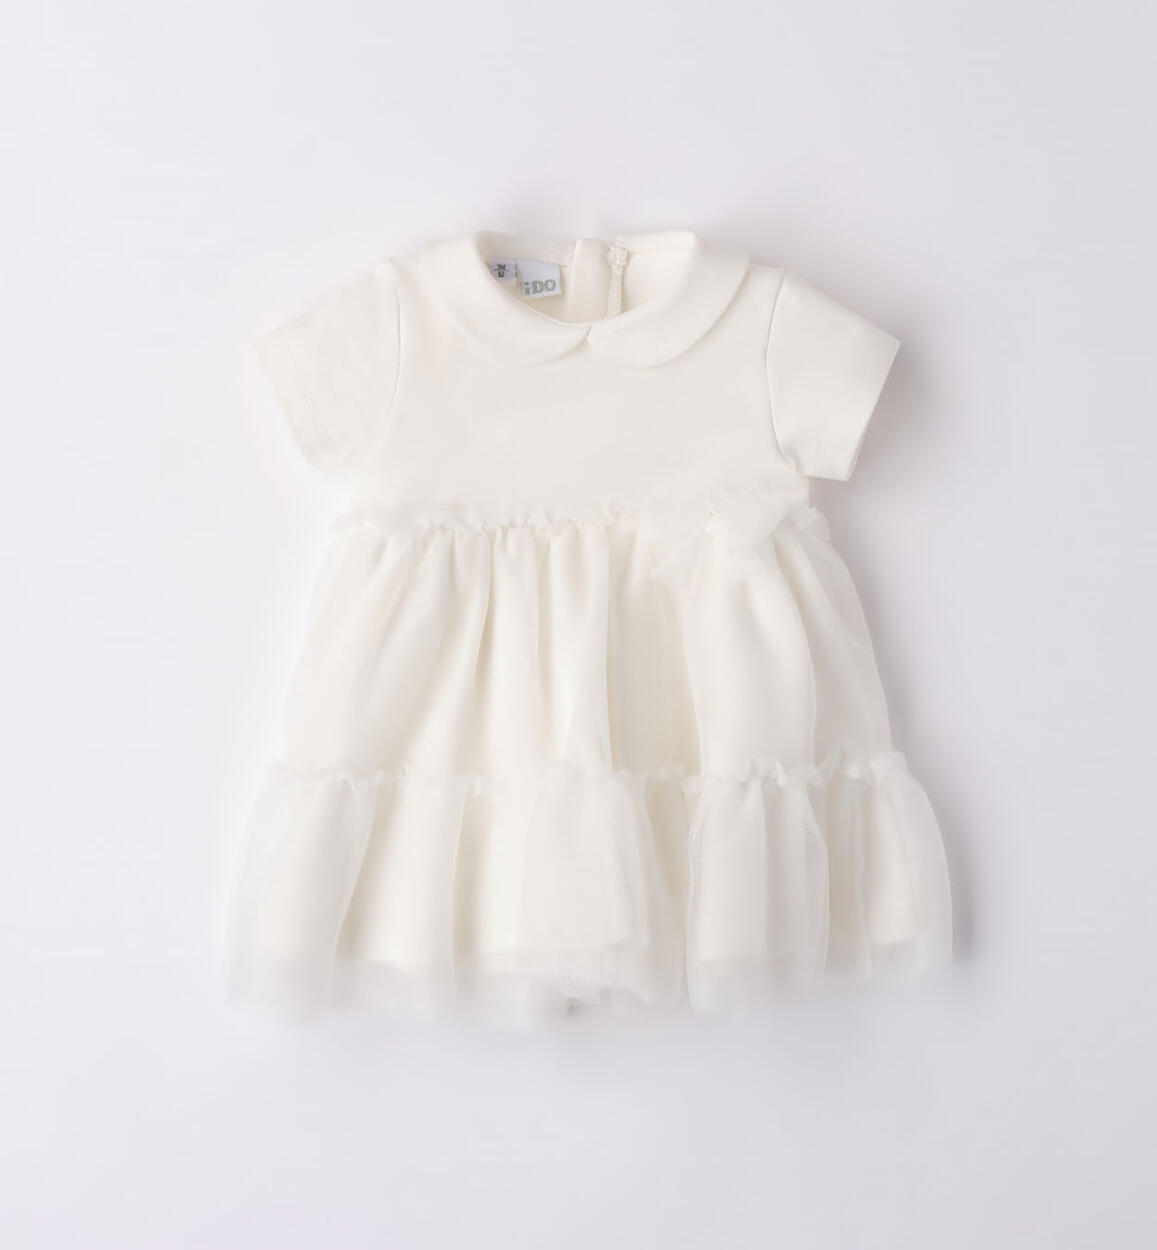 Elegante abito neonata in felpa PANNA iDO